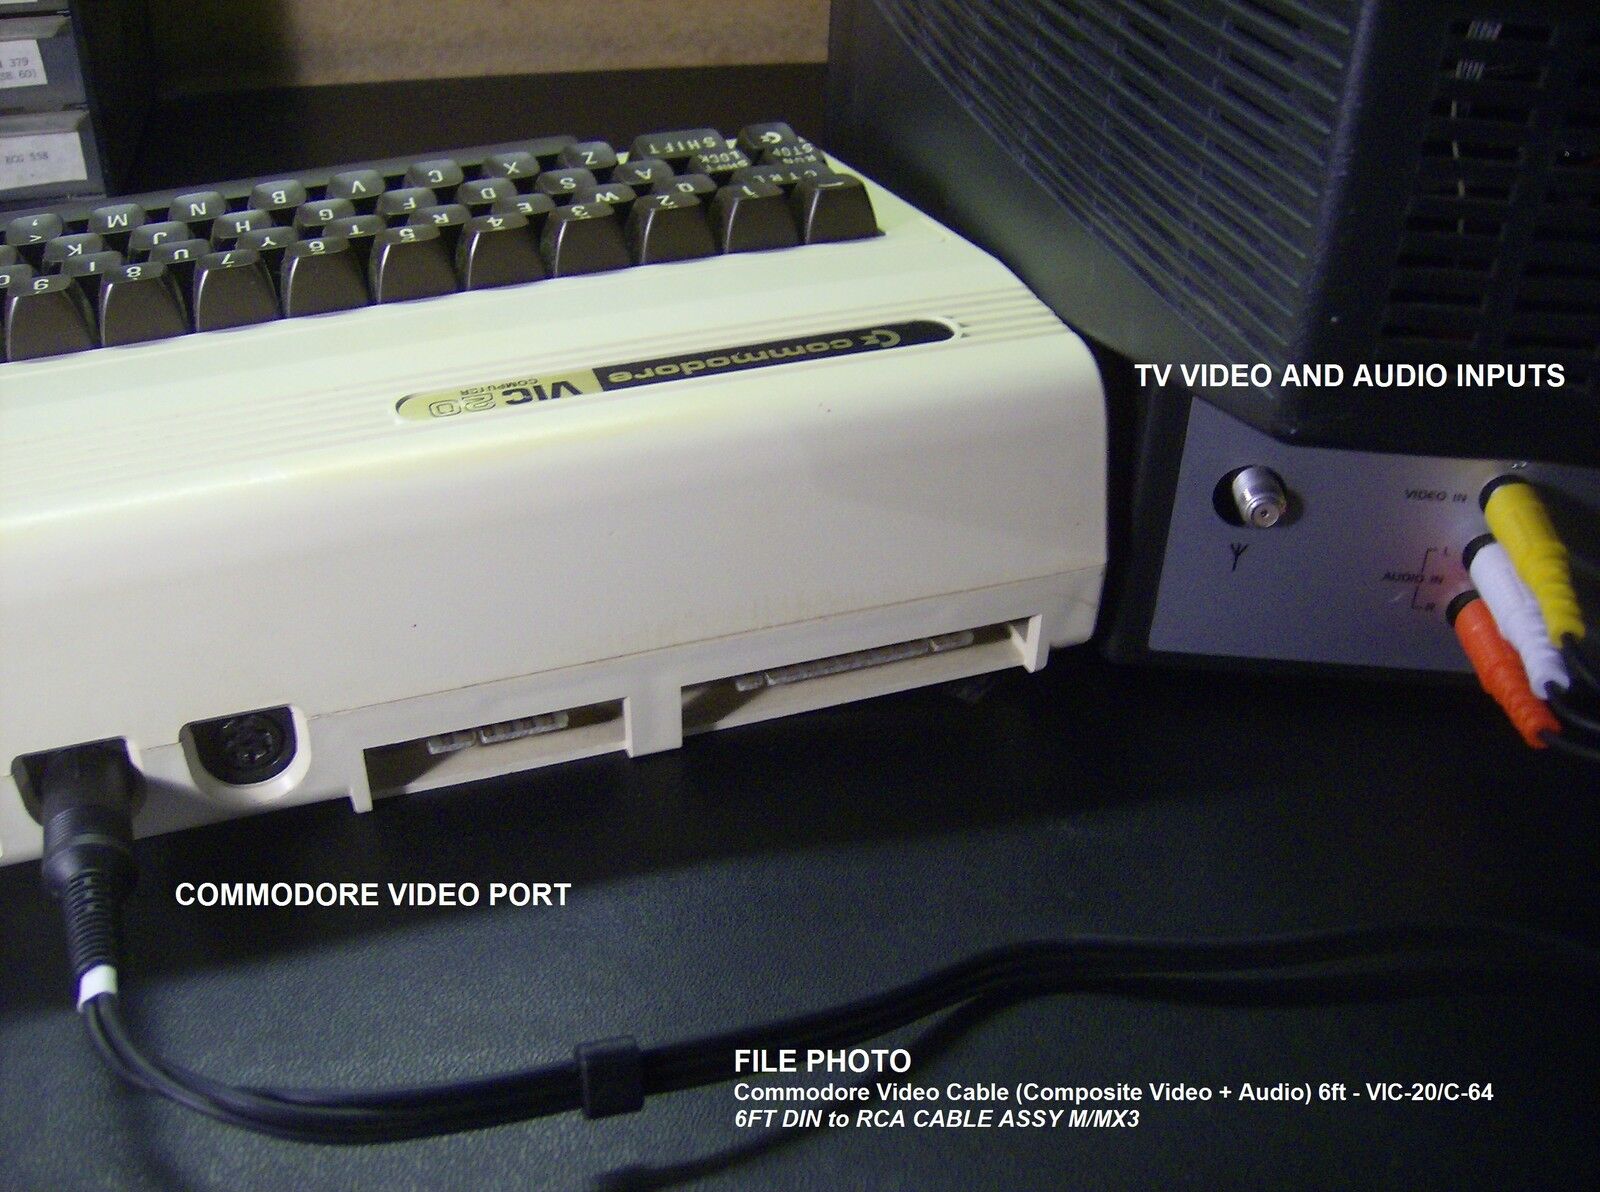 6' Commodore Video A/V Cable (Composite Video + Audio) - VIC-20/C-64 (5pin)